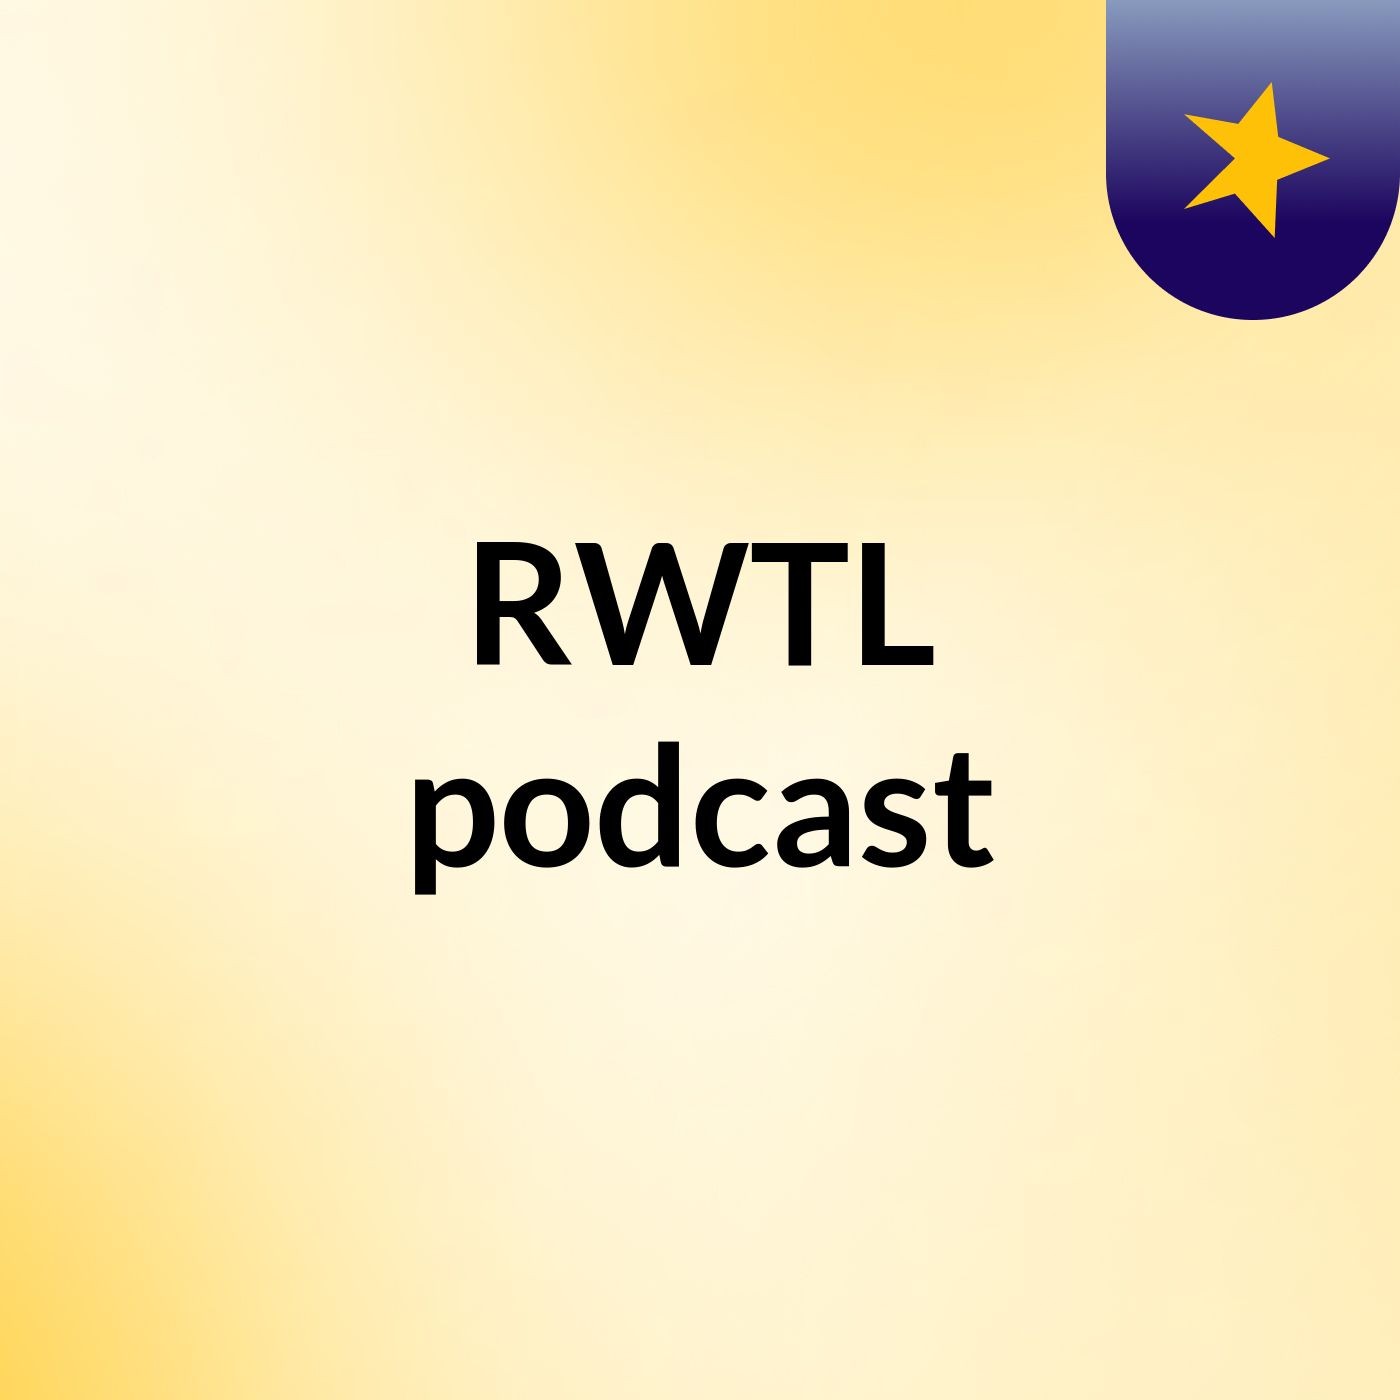 RWTL podcast